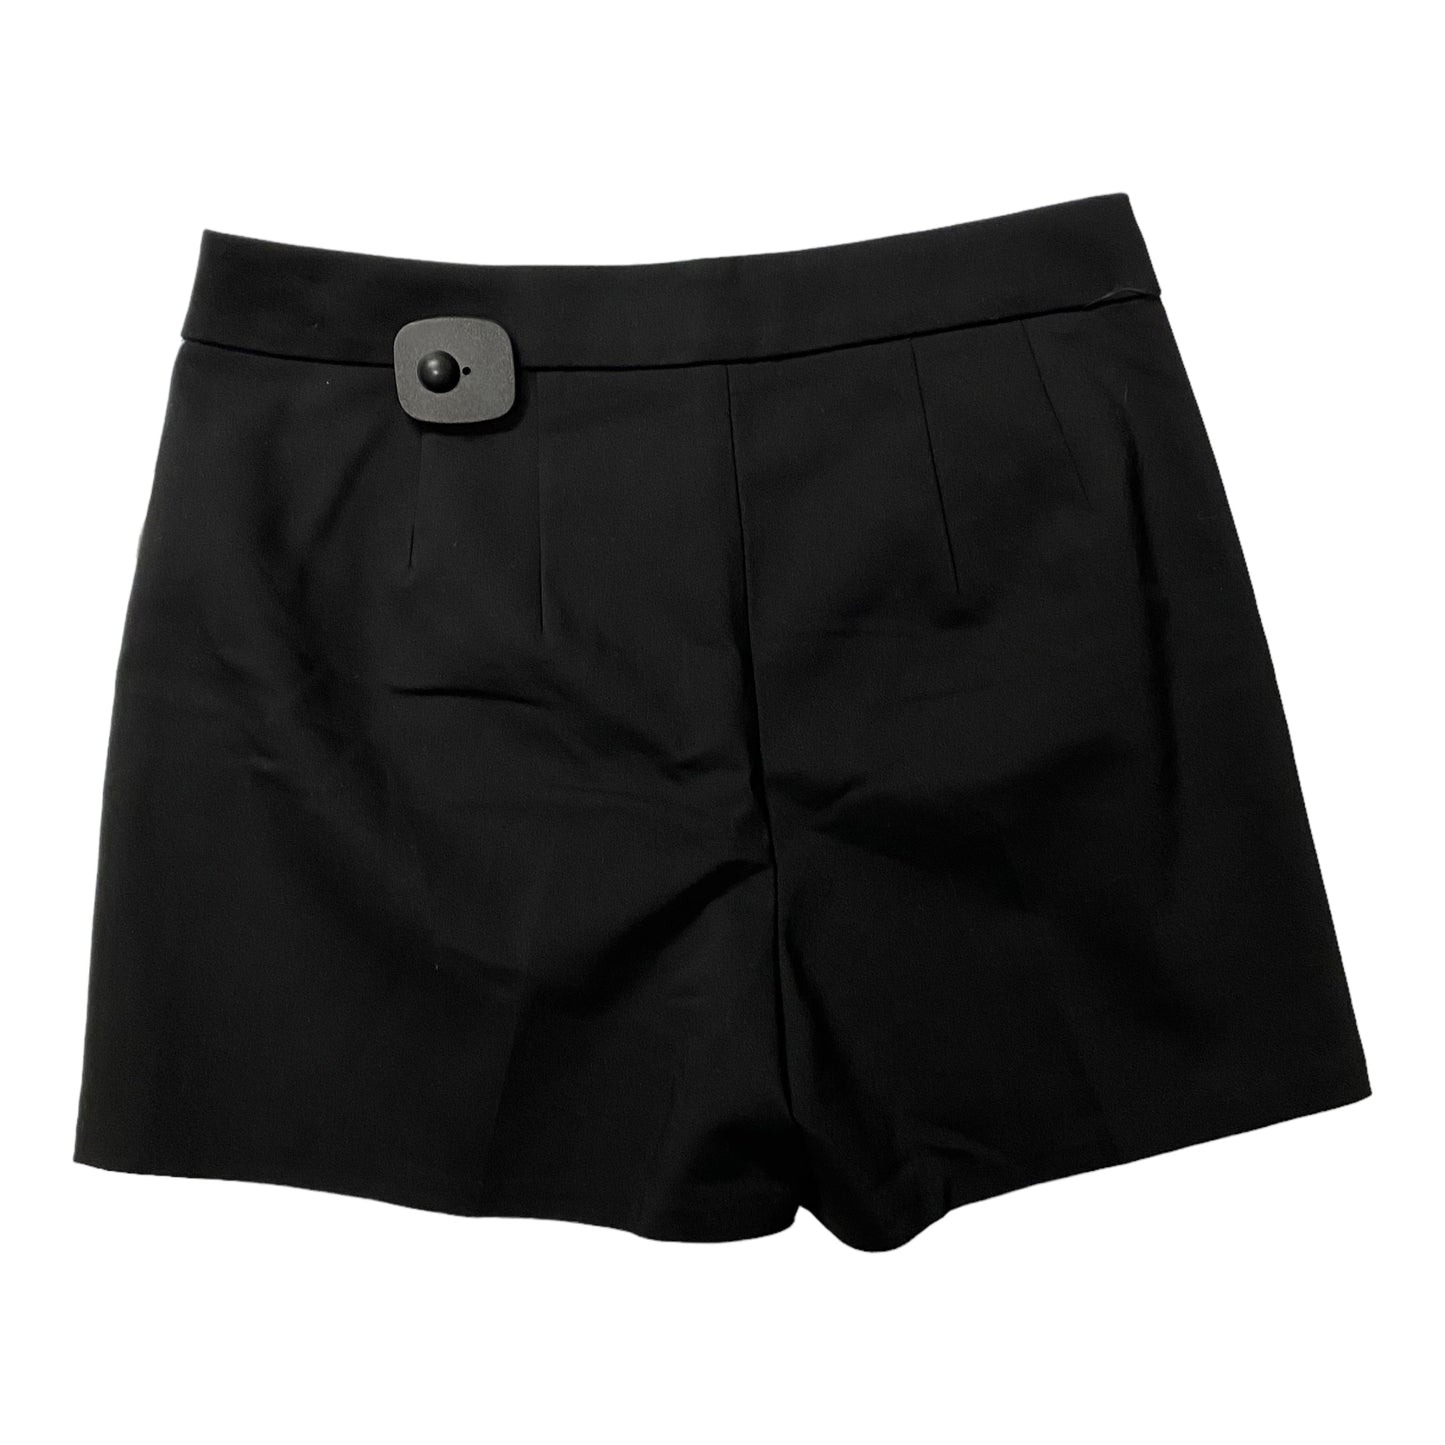 Black Shorts Express, Size 8